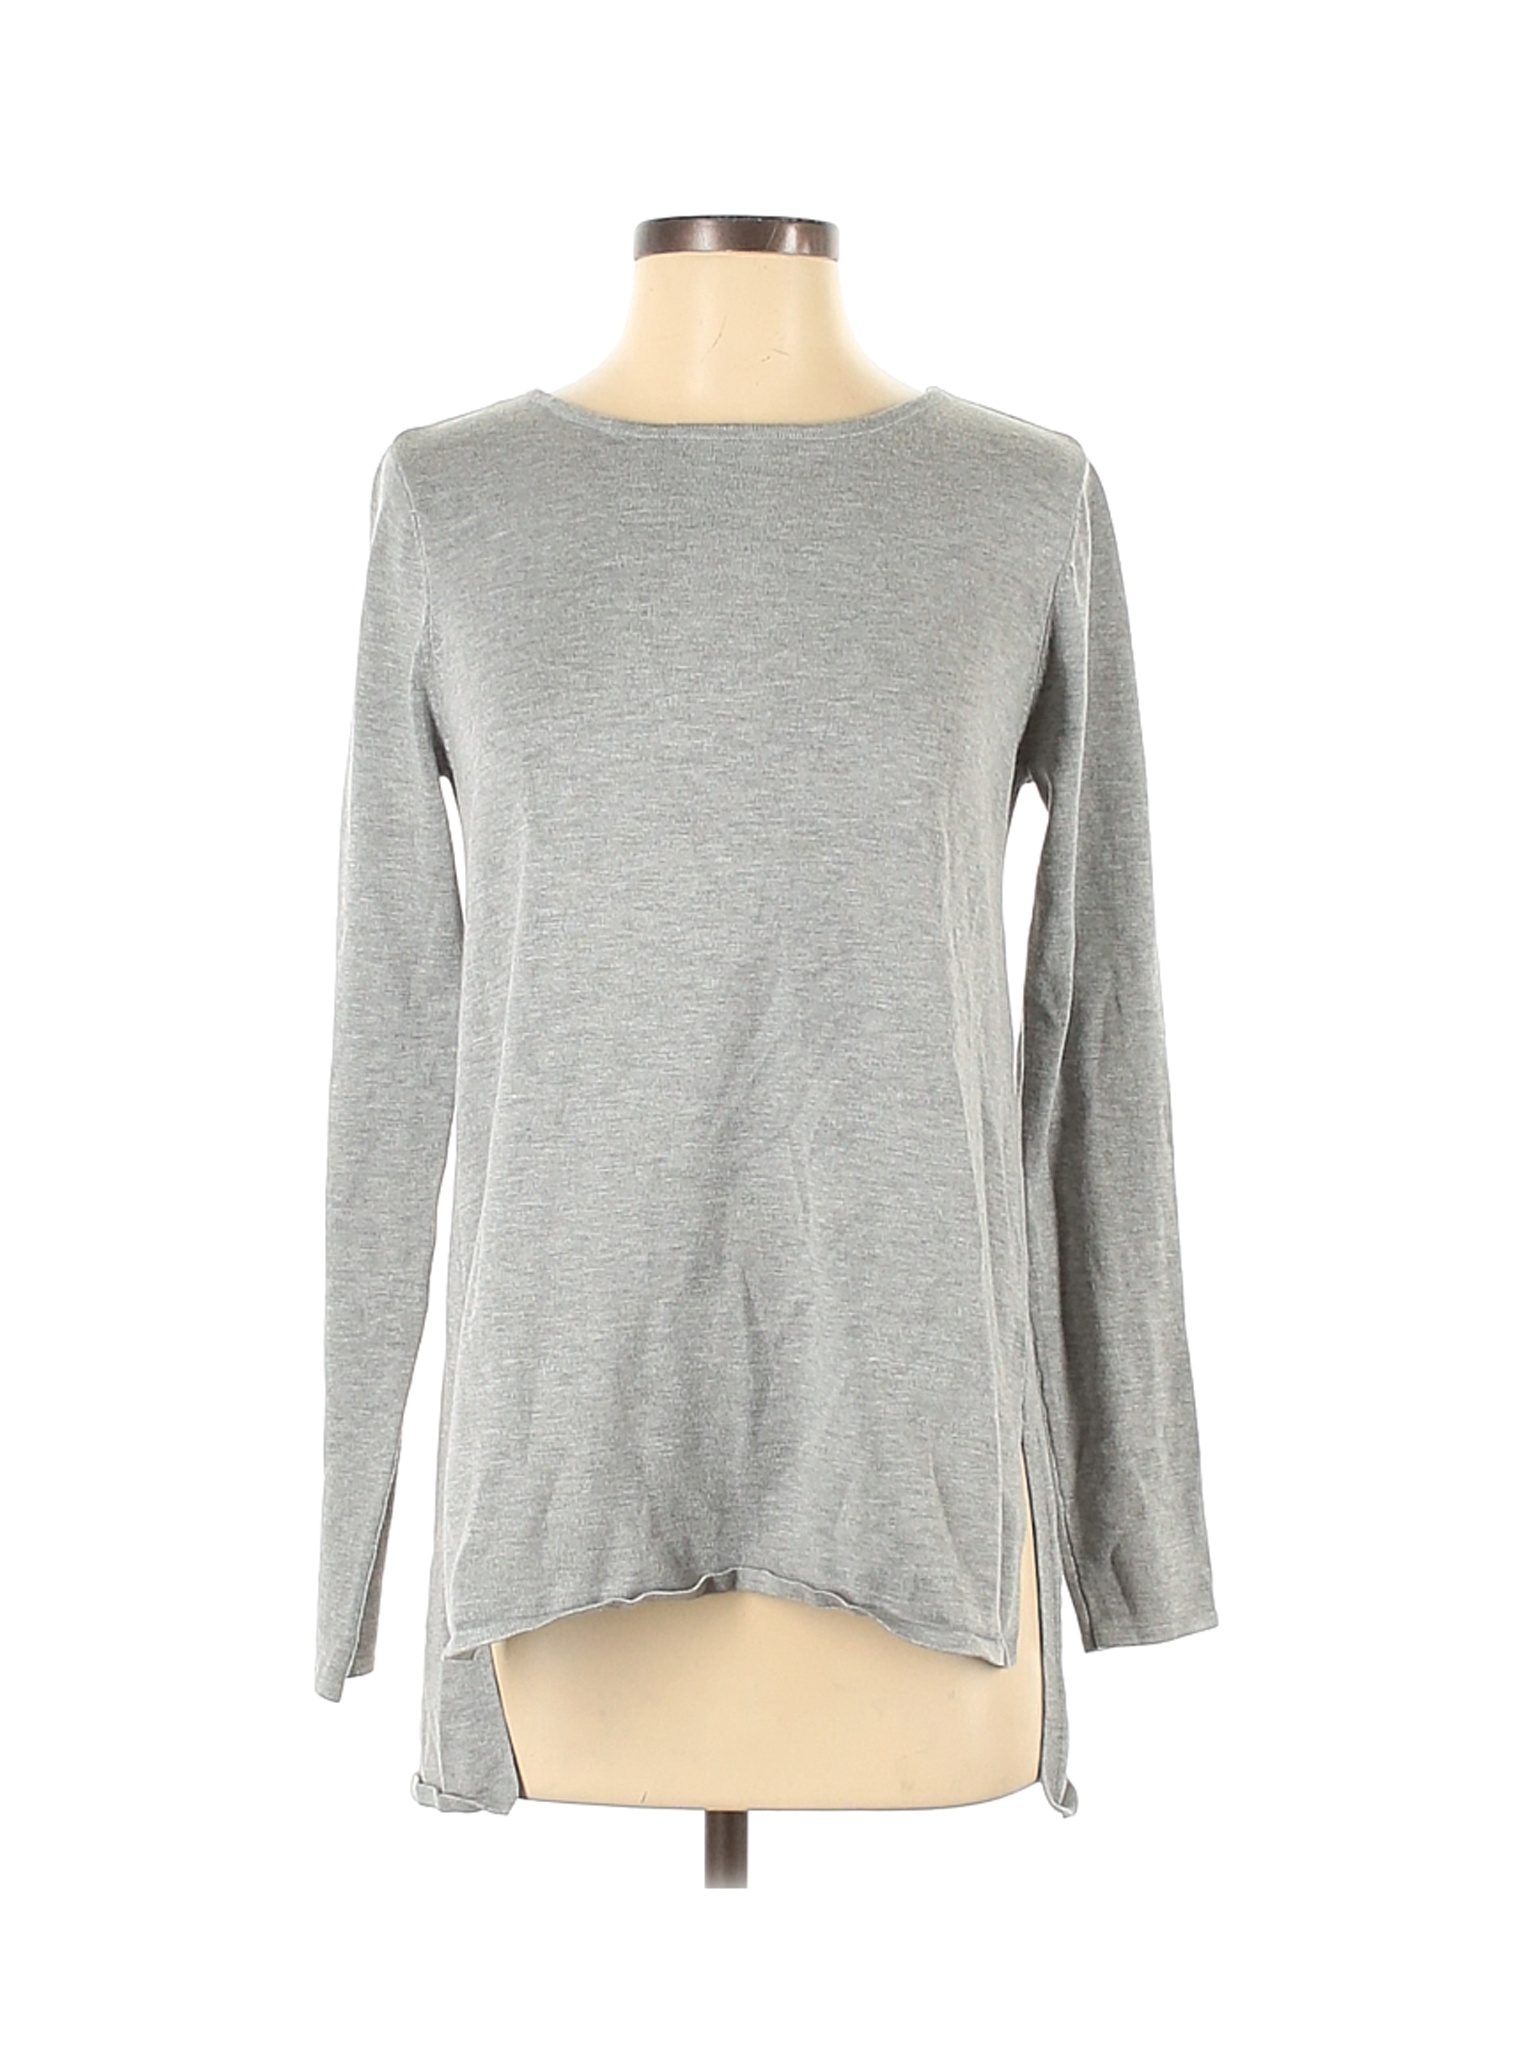 PREMISE Women Gray Pullover Sweater S | eBay